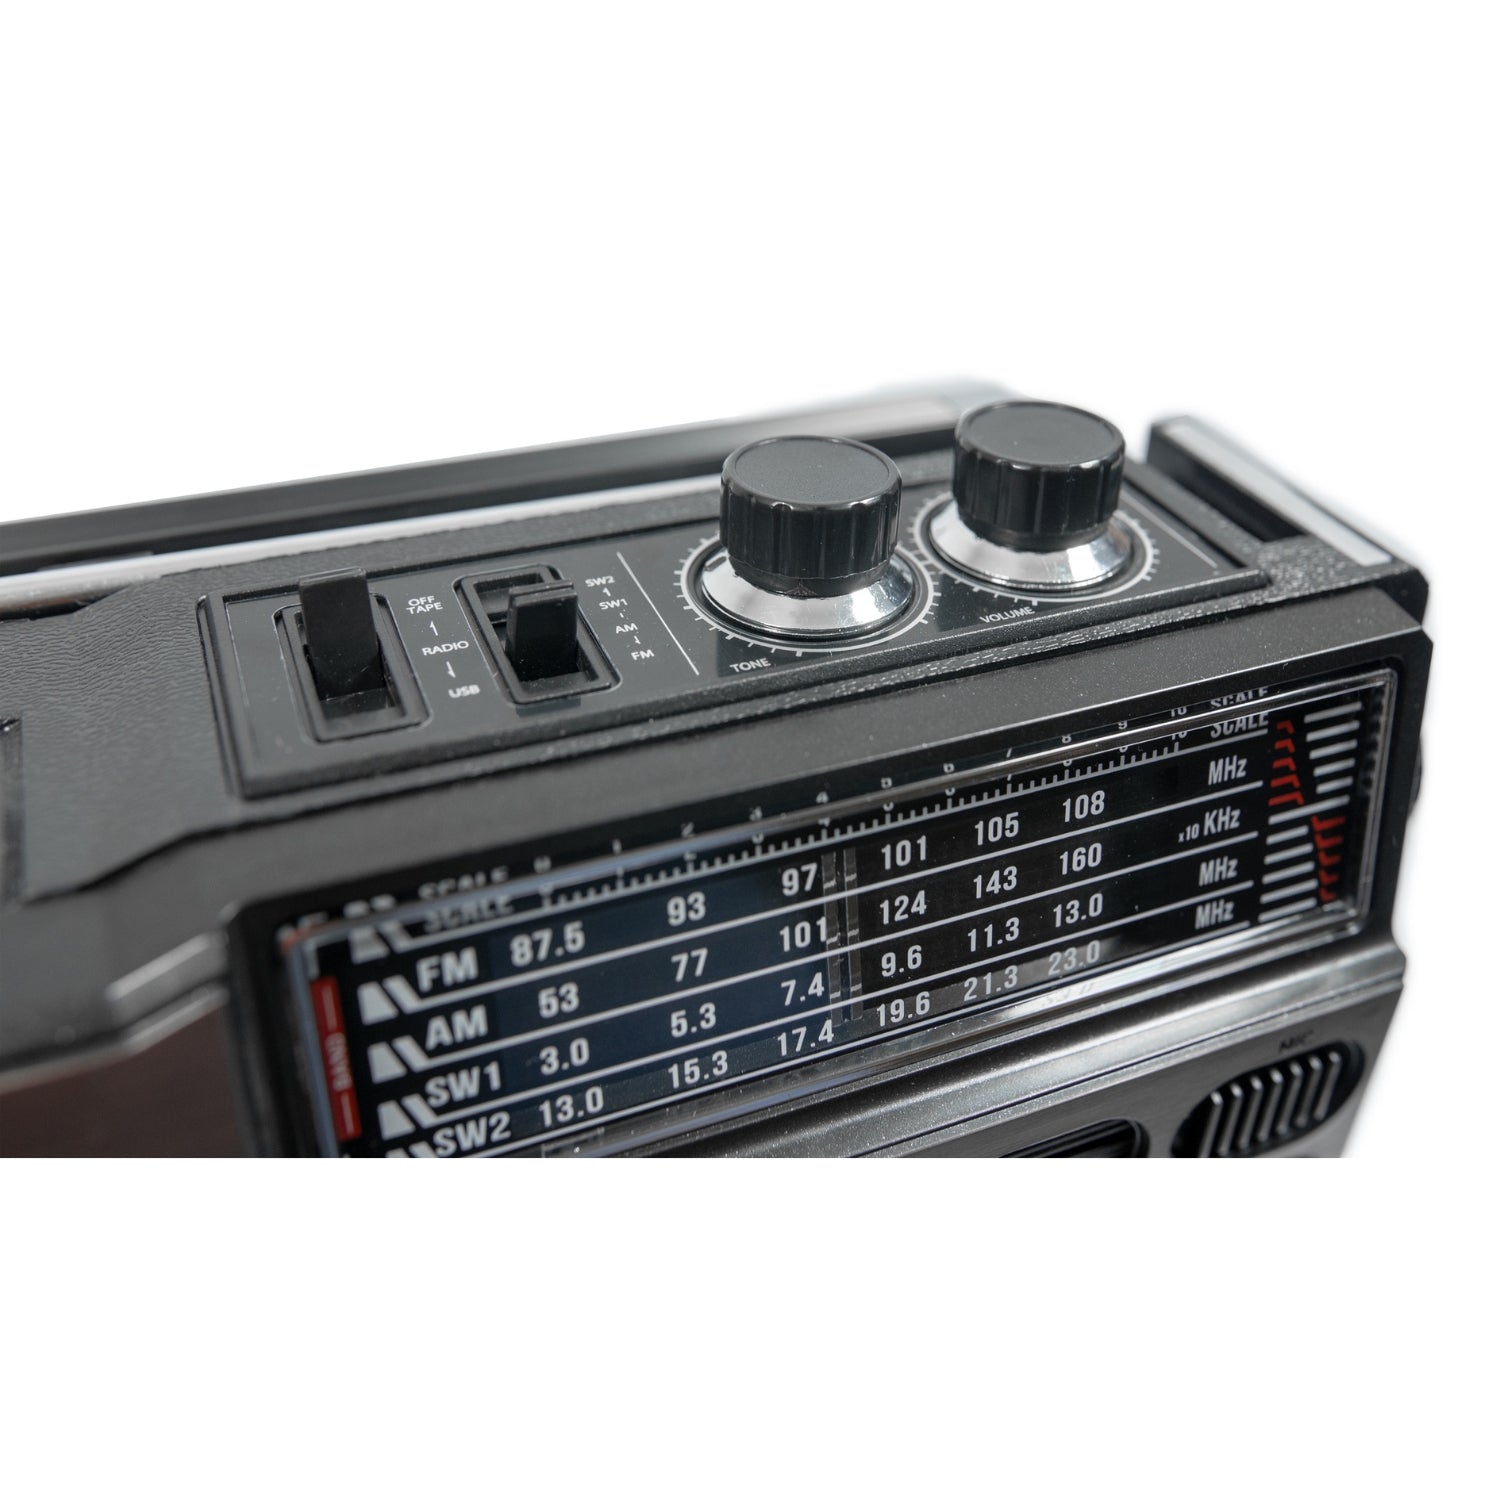 Soundmaster RR18SW Retro Radio Cassette Recorder avec enregistrement USB/SD